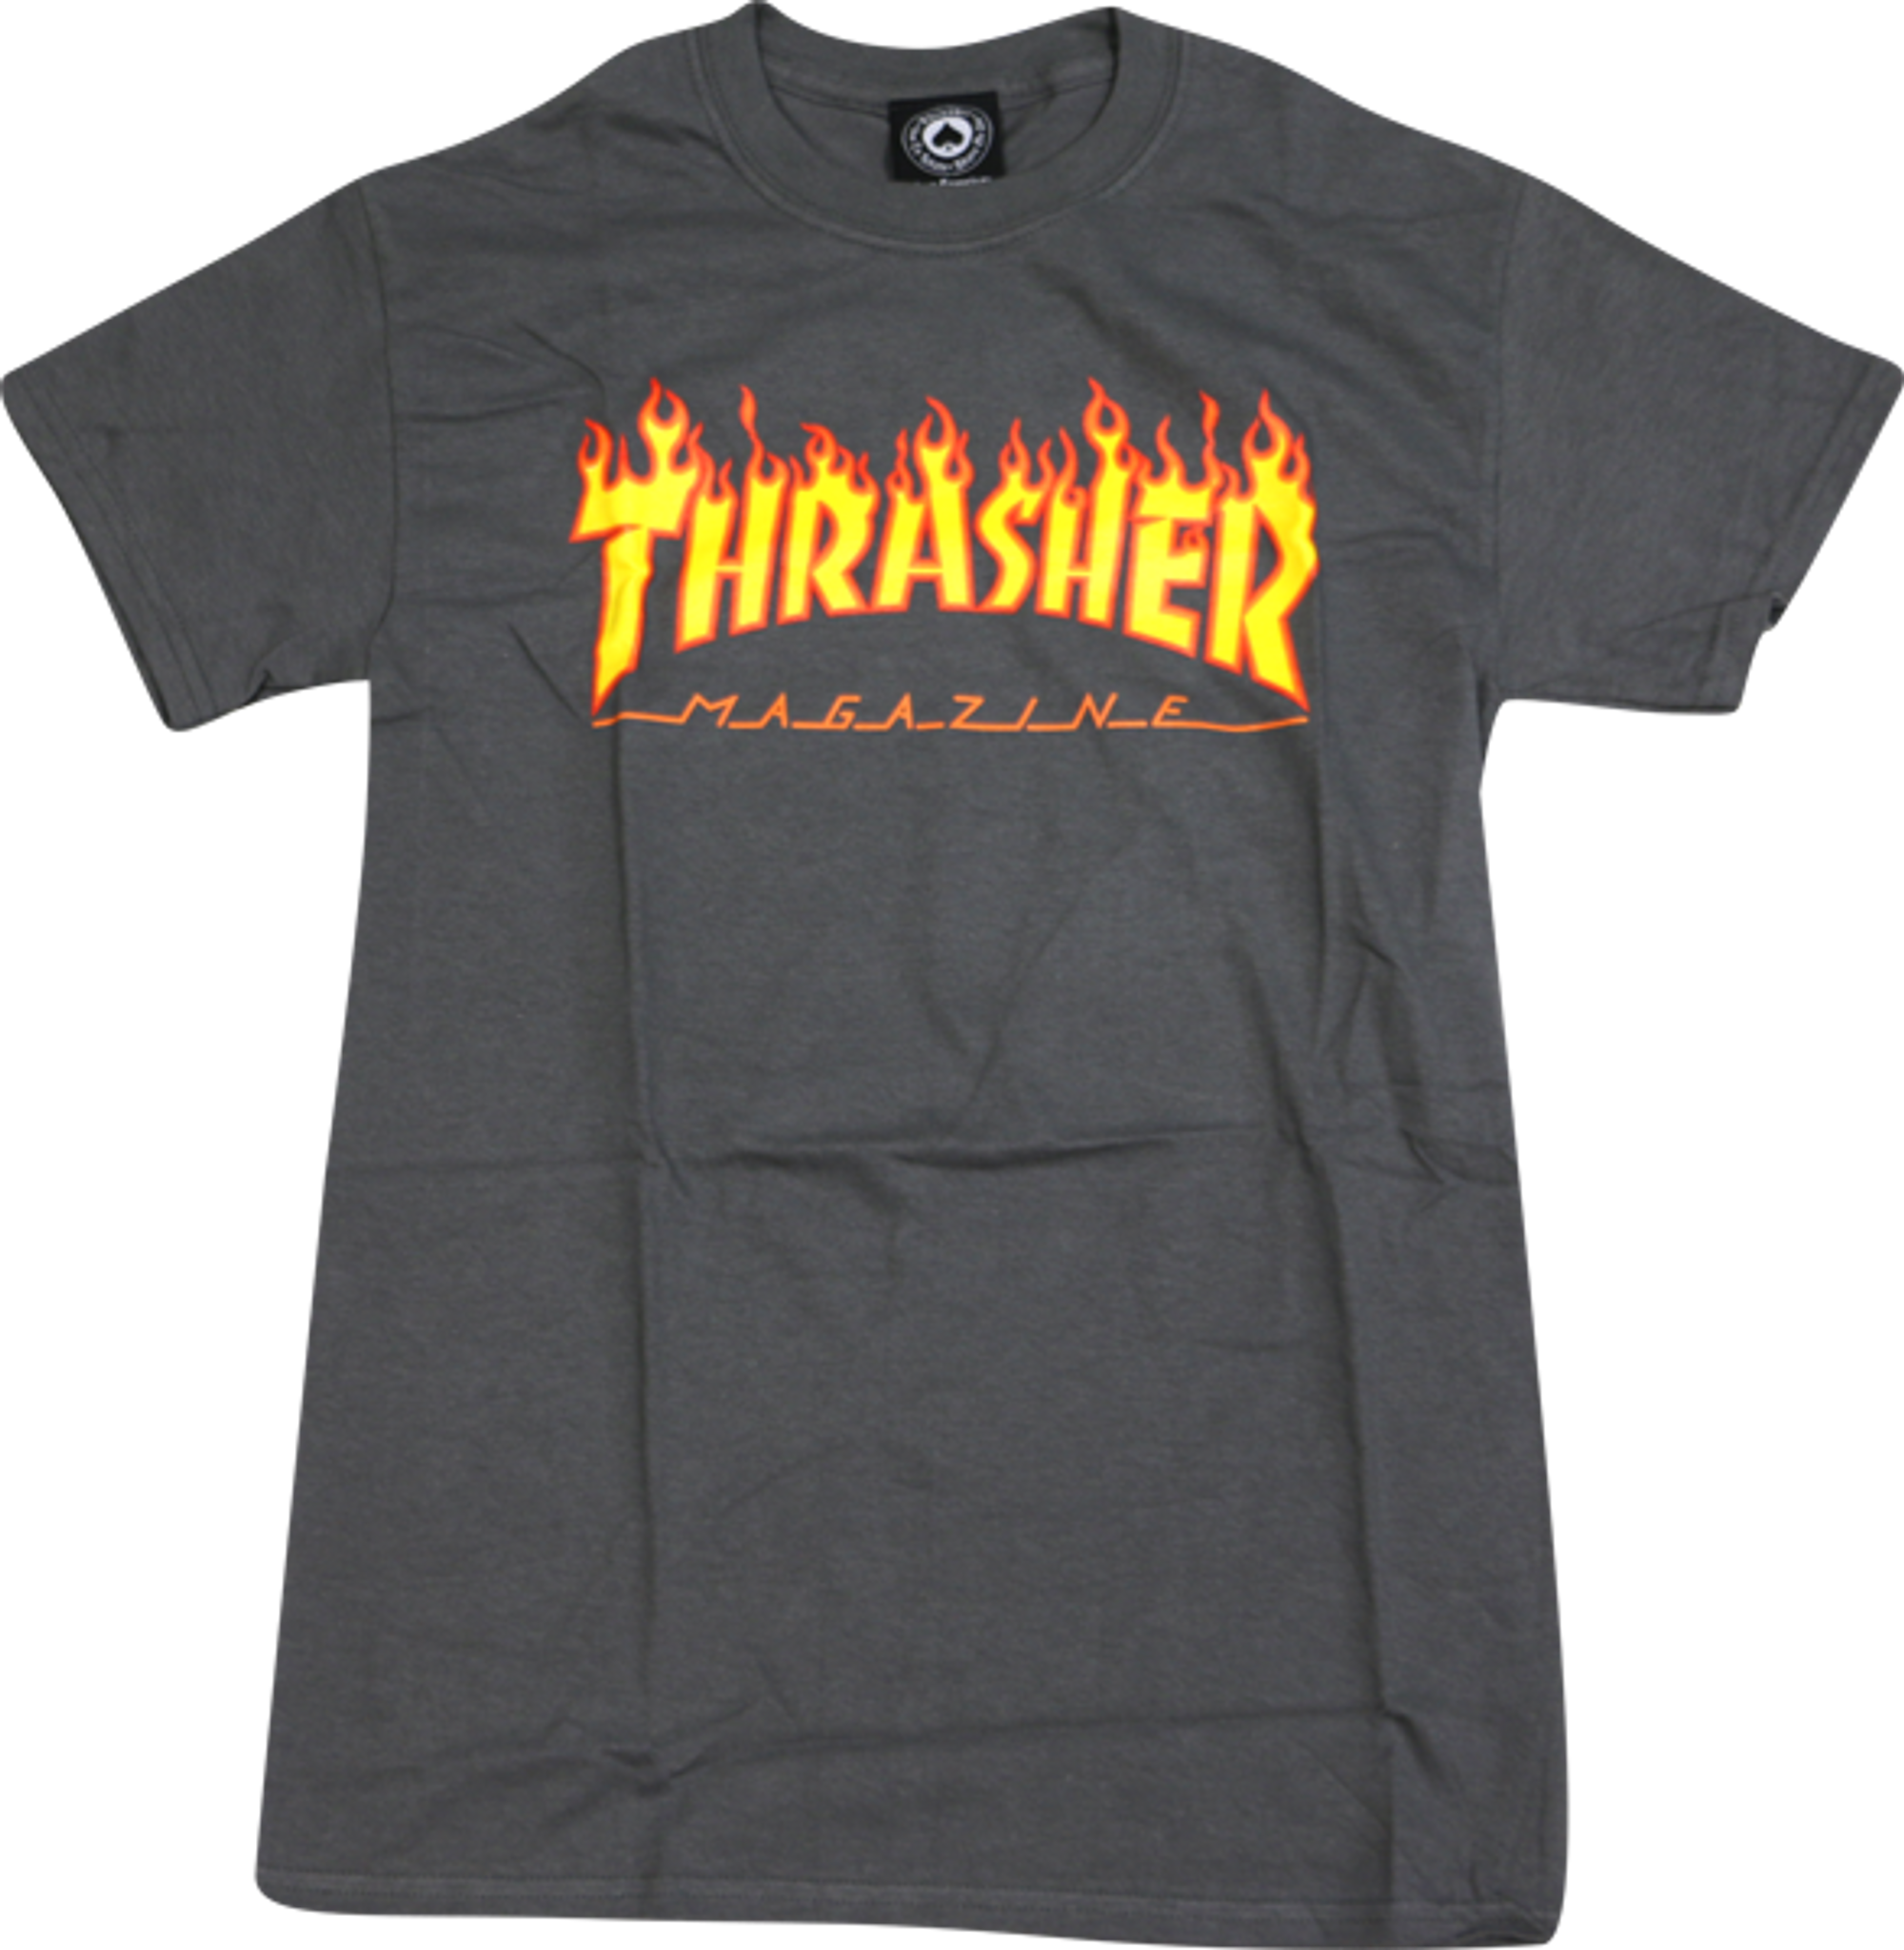 Thrasher Magazine Flame Logo T-Shirt Tee Shirt Flames